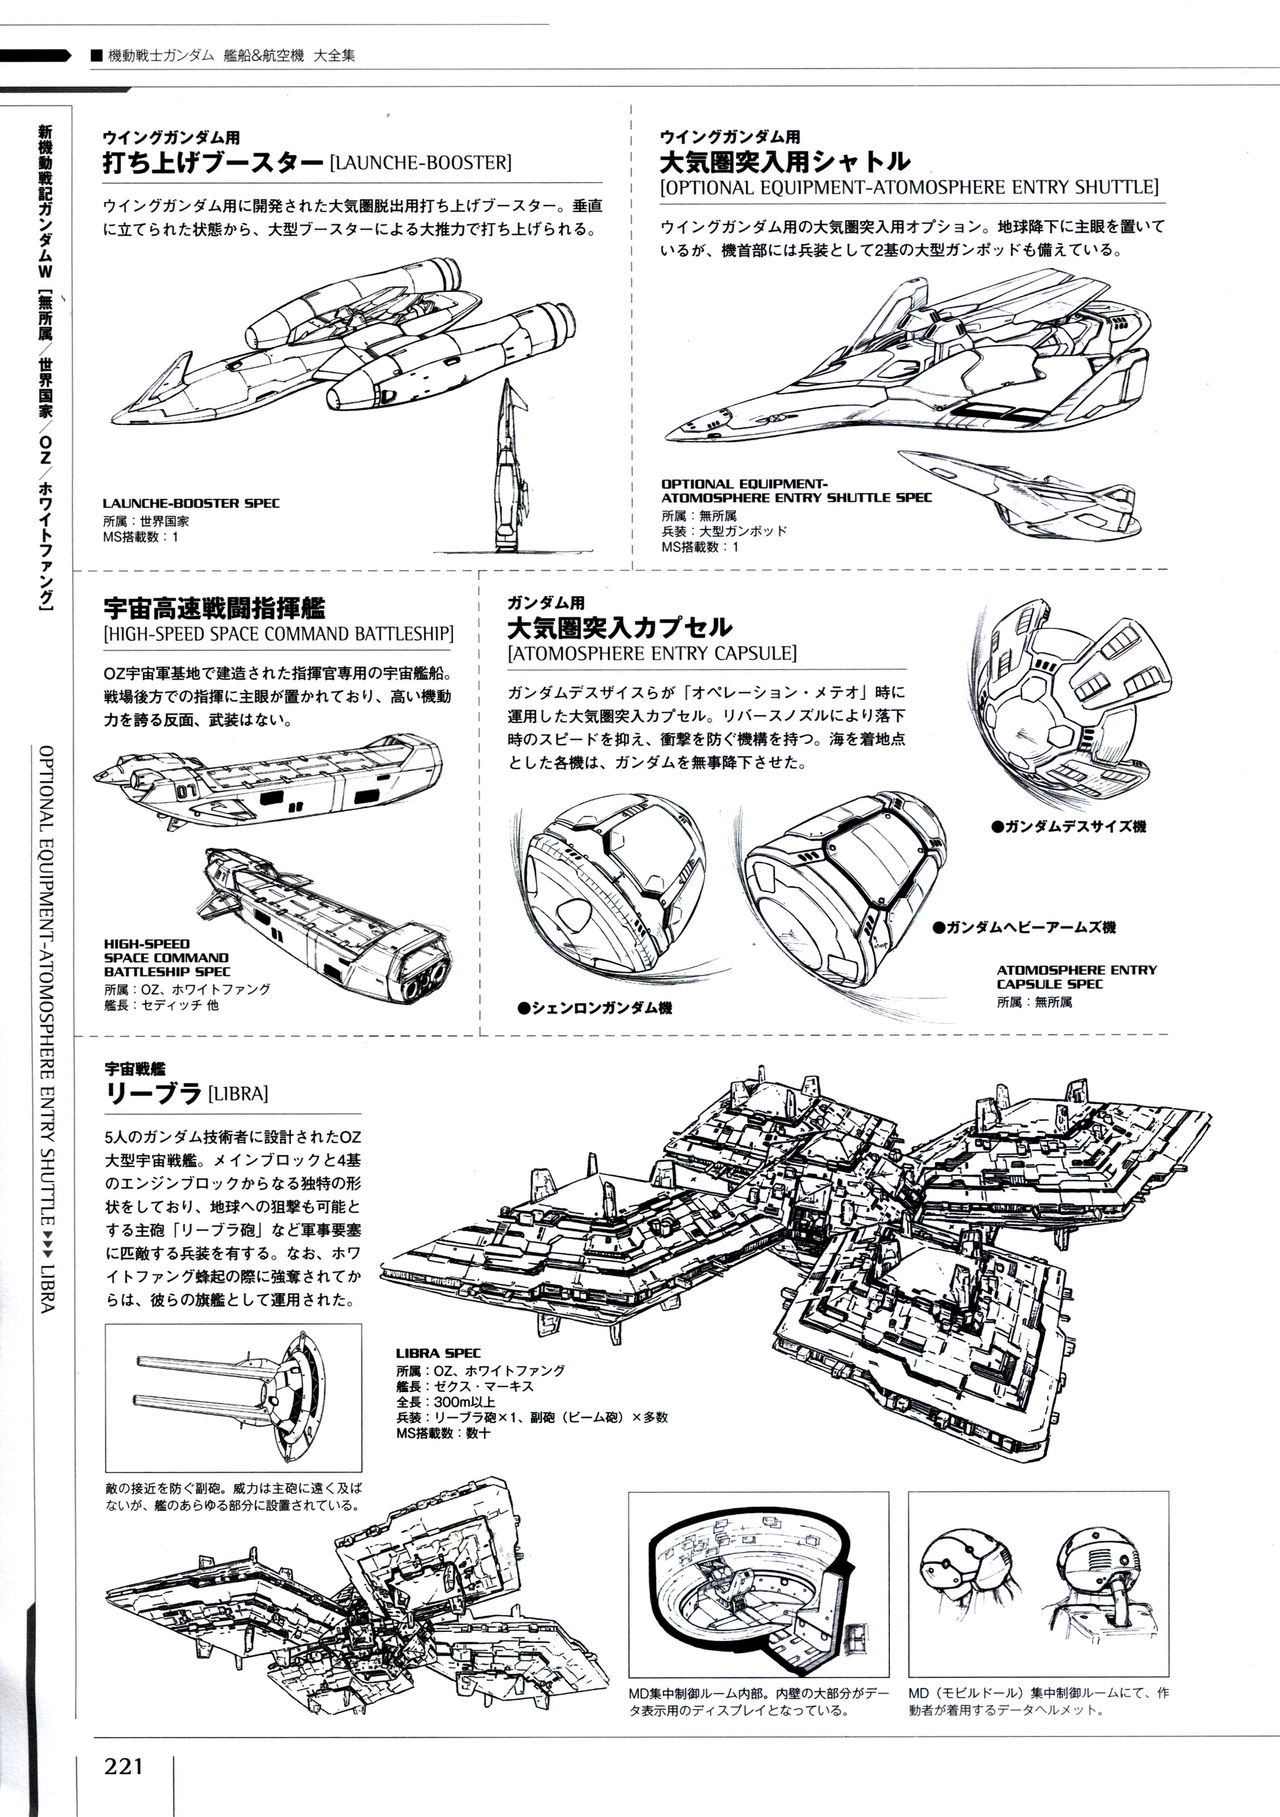 Mobile Suit Gundam - Ship & Aerospace Plane Encyclopedia - Revised Edition 226